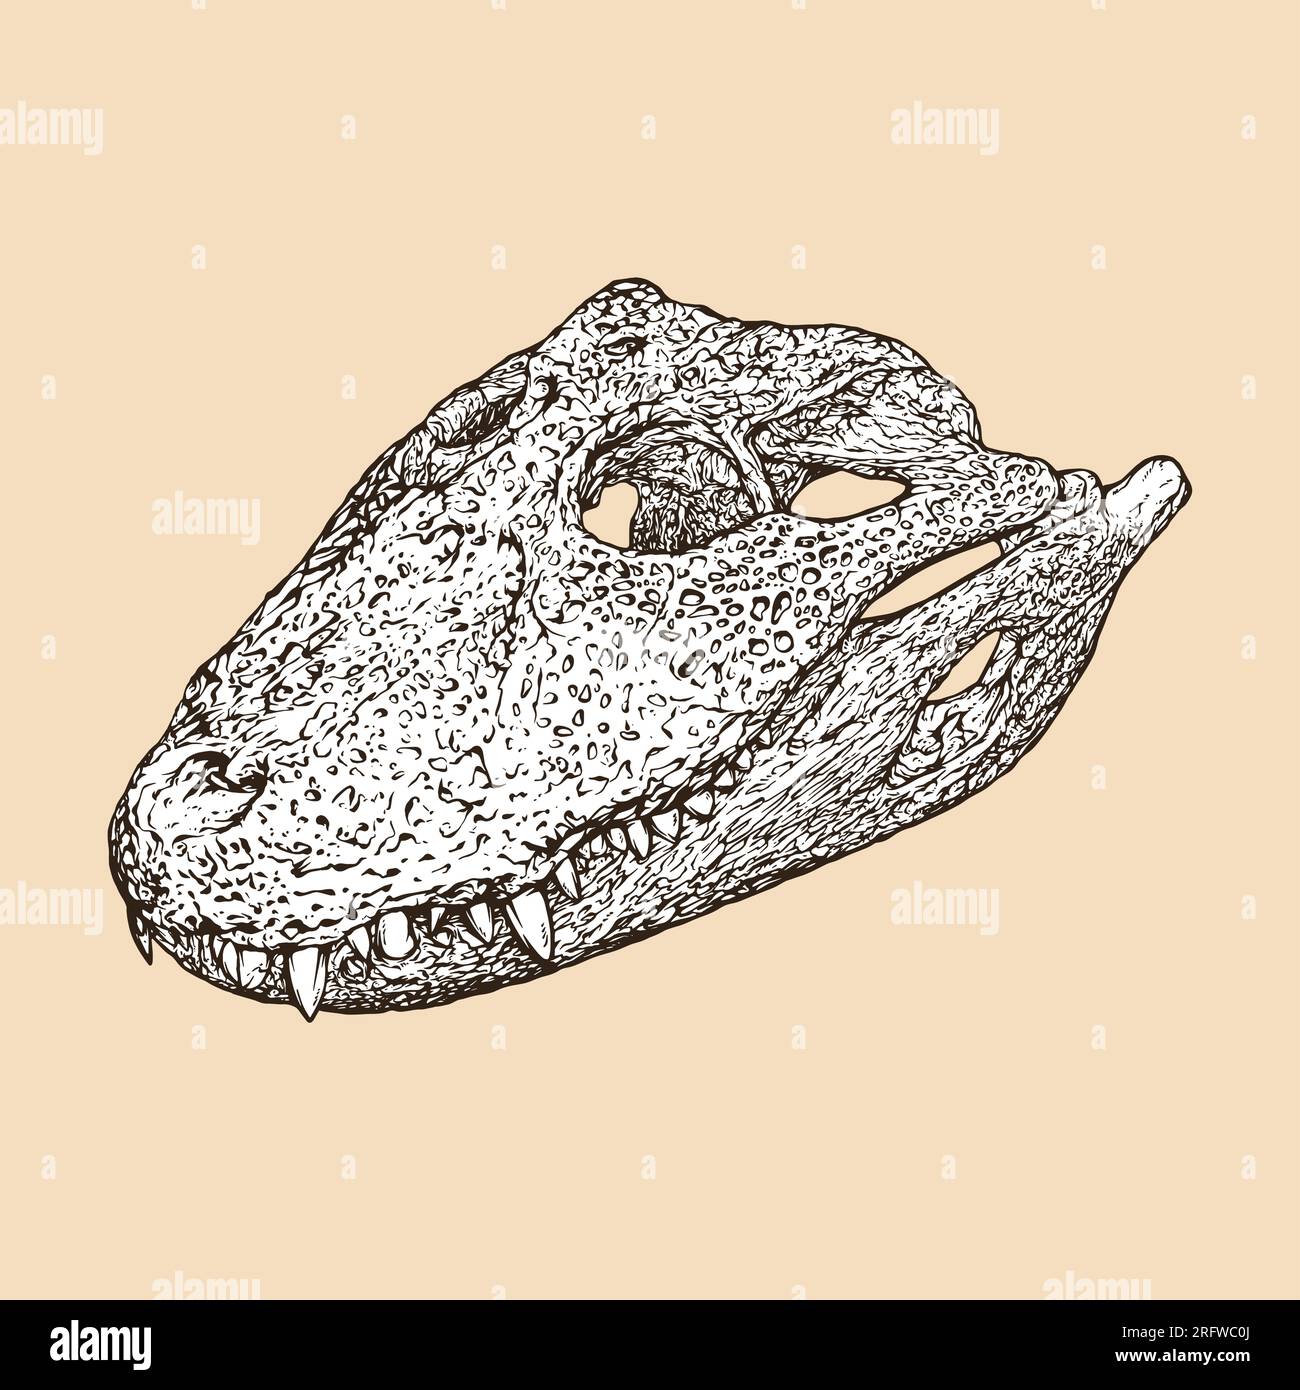 broad snouted caiman skull head vector illustration Stock Vector